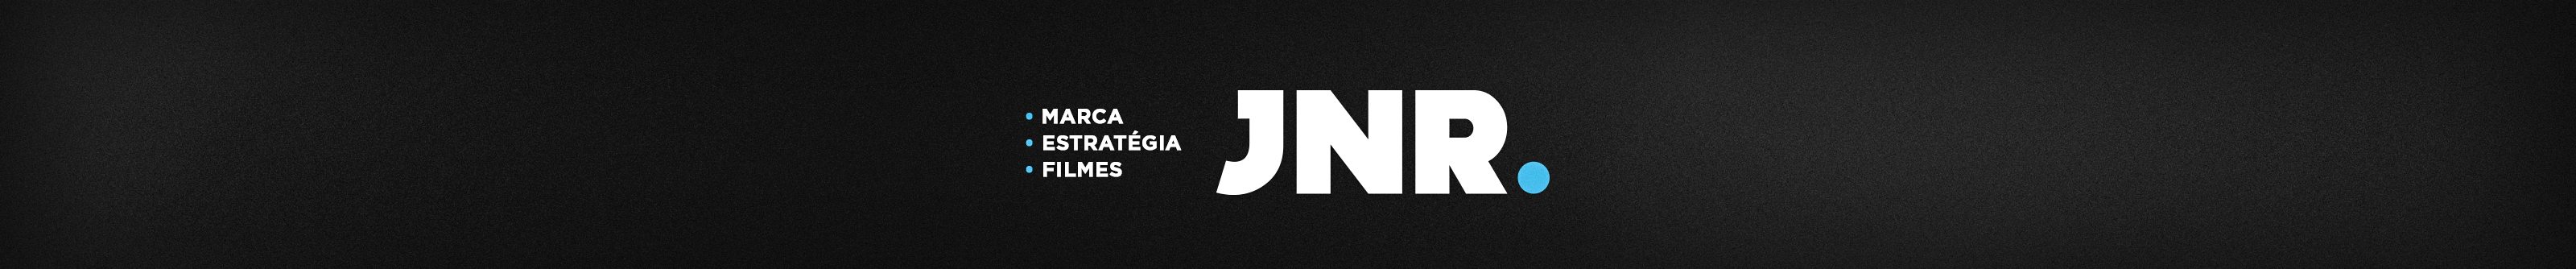 JNR .'s profile banner